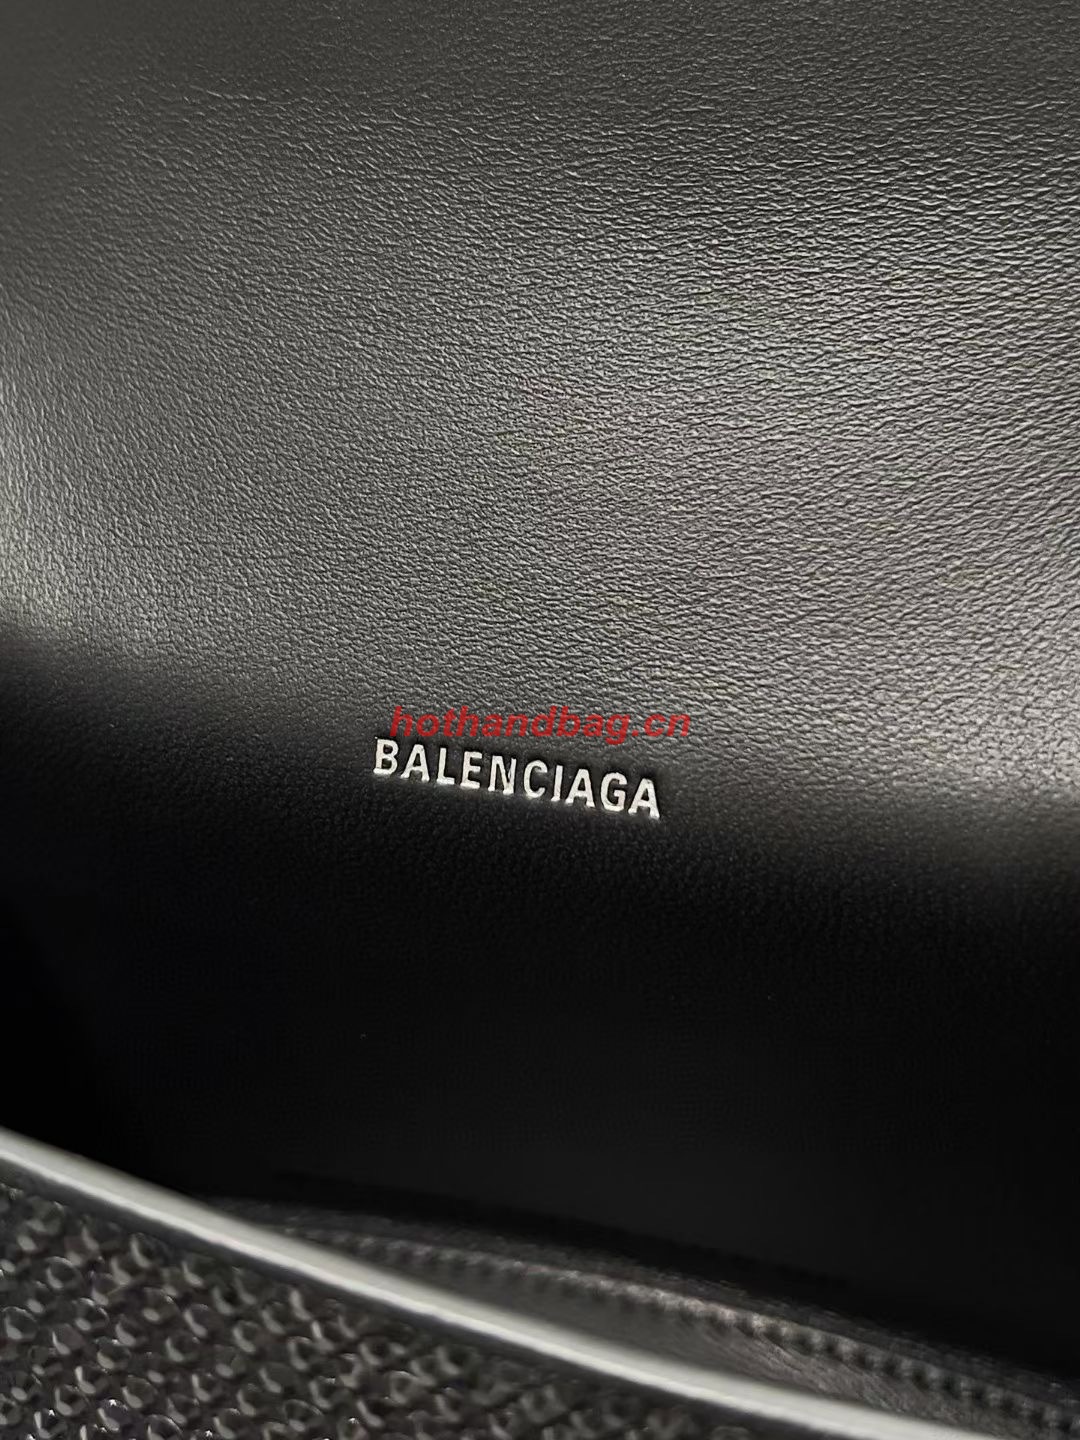 Balenciaga WOMENS HOURGLASS XS HANDBAG WITH RHINESTONES 283328 IN black